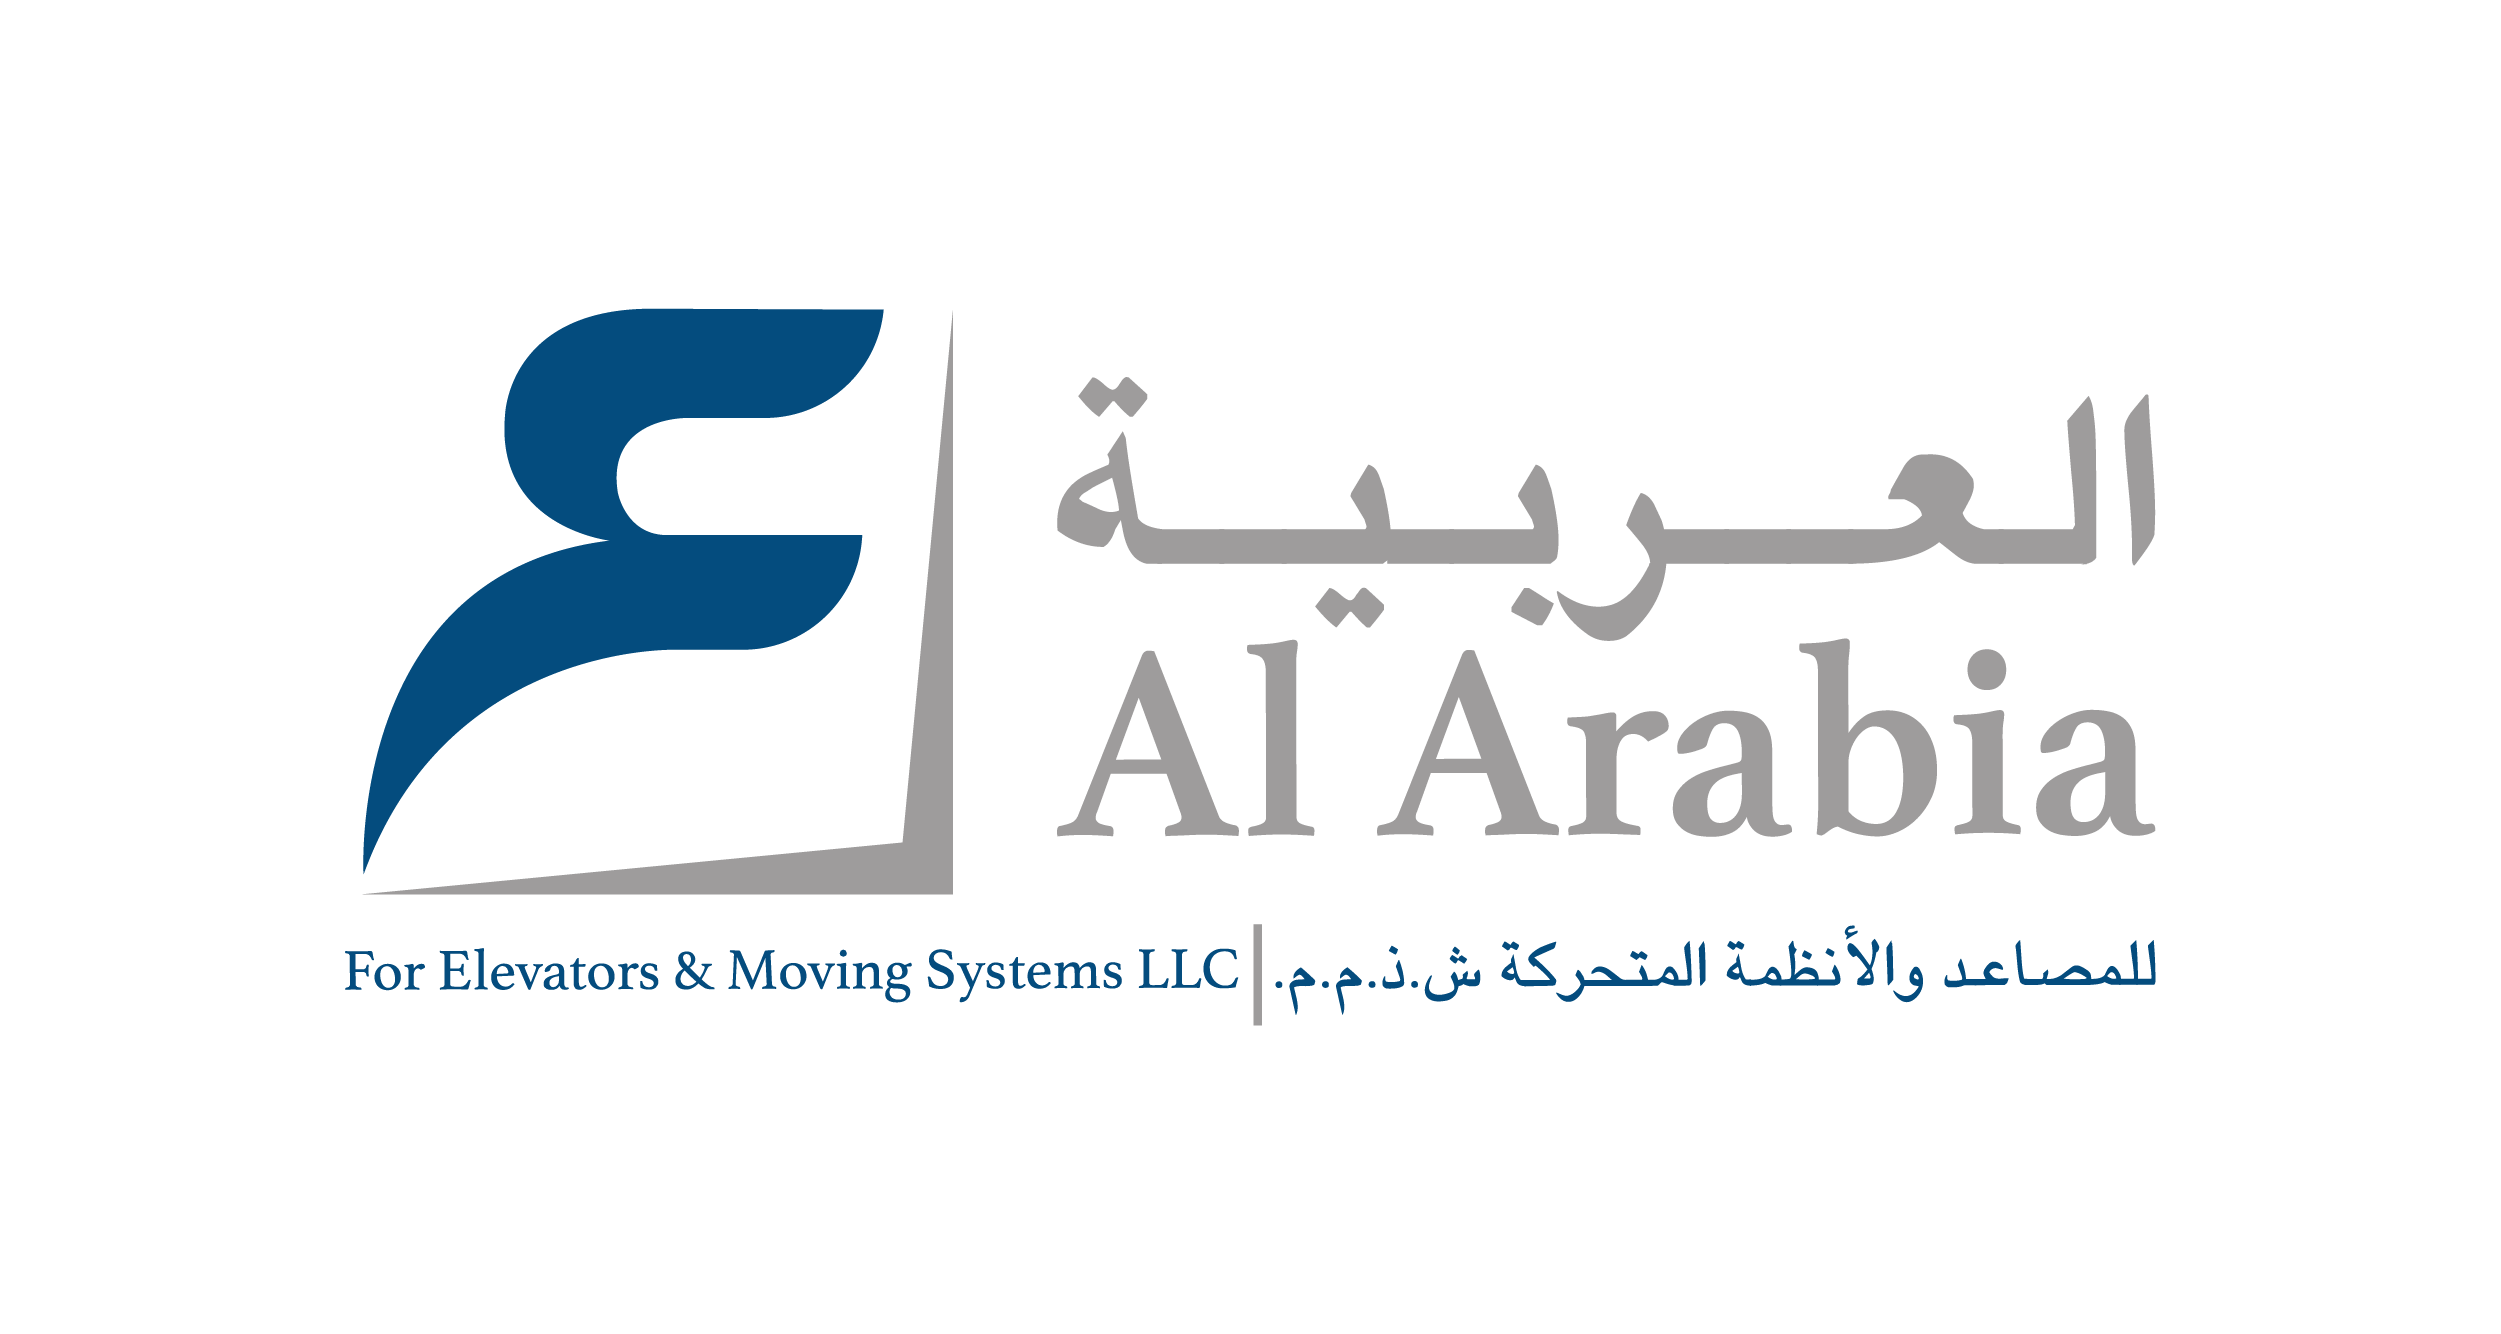 Al Arabia for Elevators & Moving Systems Logo